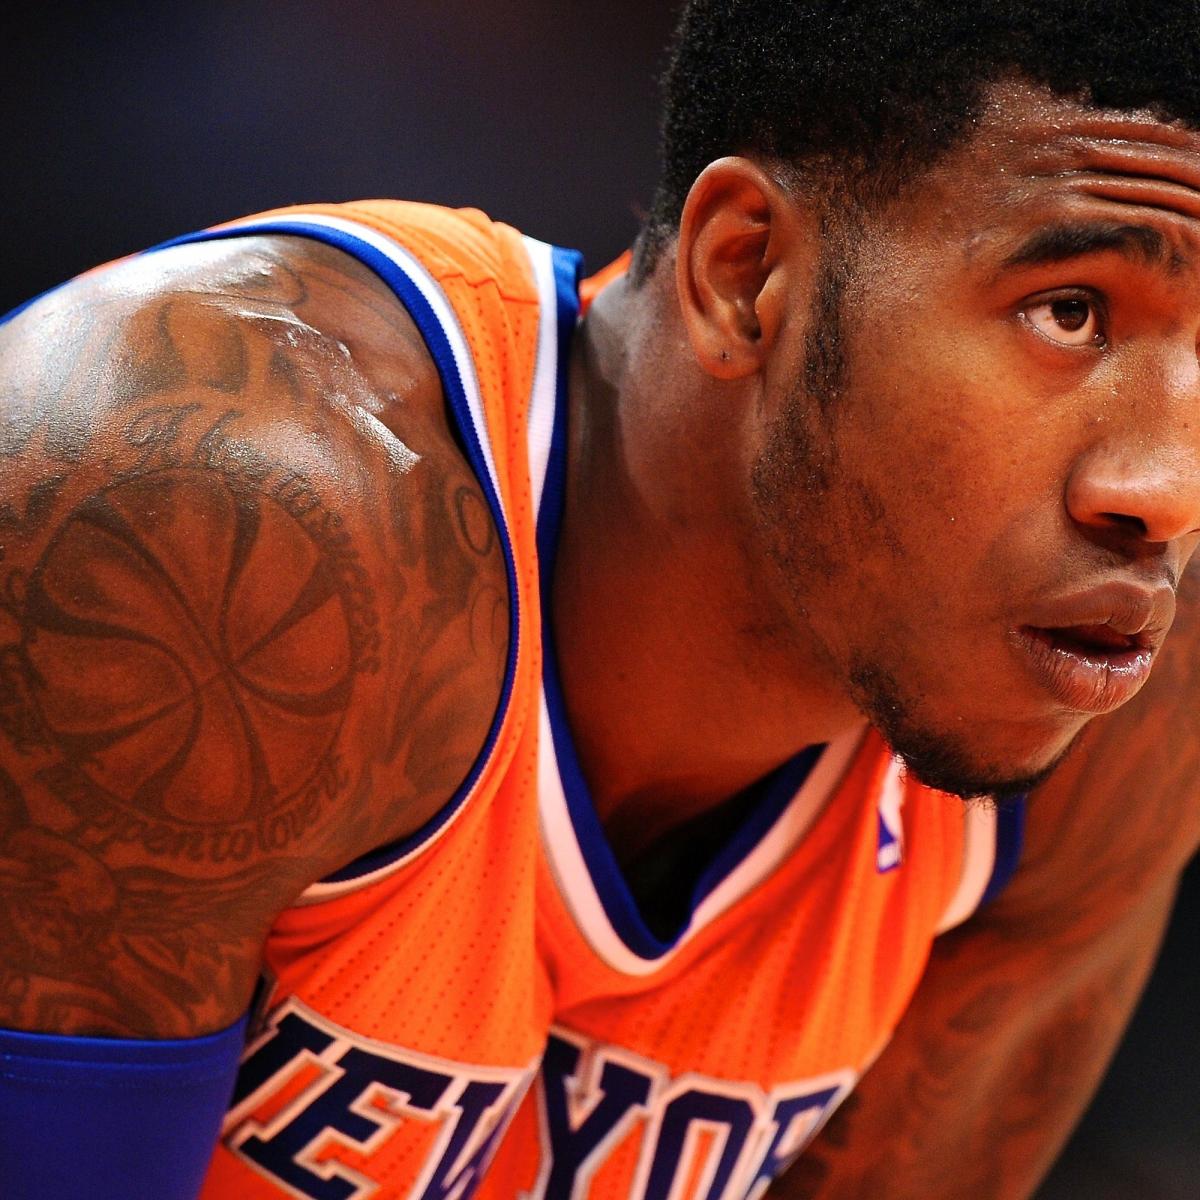 NBA Rumors: Knicks' Iman Shumpert could go to Clippers, Thunder